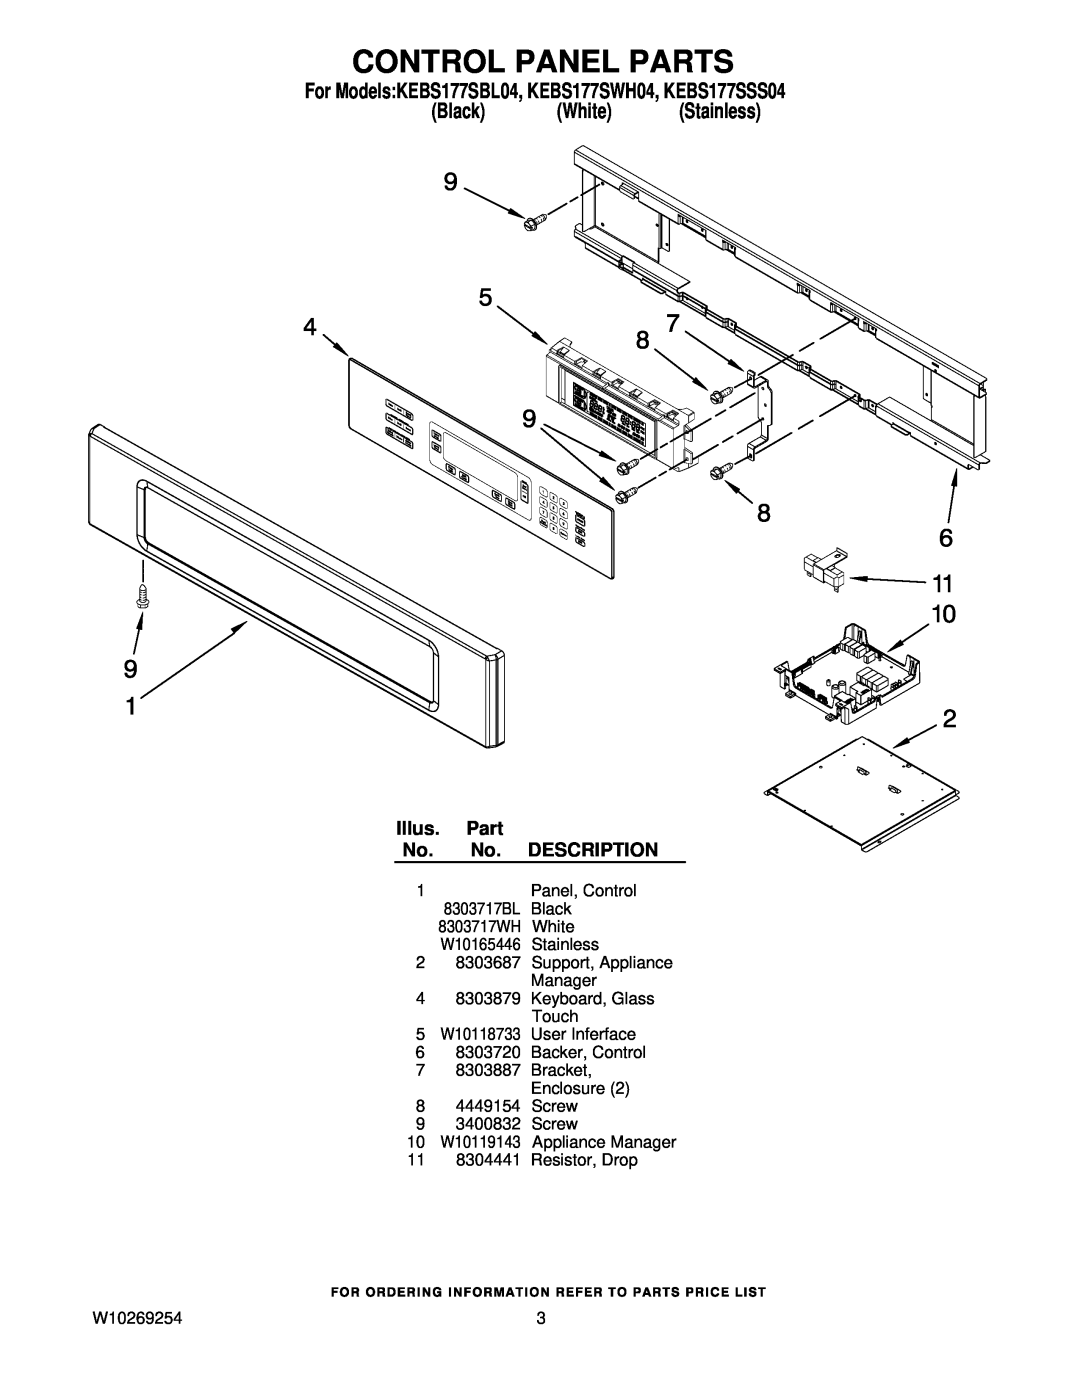 KitchenAid manual Control Panel Parts, Illus, Description, For ModelsKEBS177SBL04, KEBS177SWH04, KEBS177SSS04 